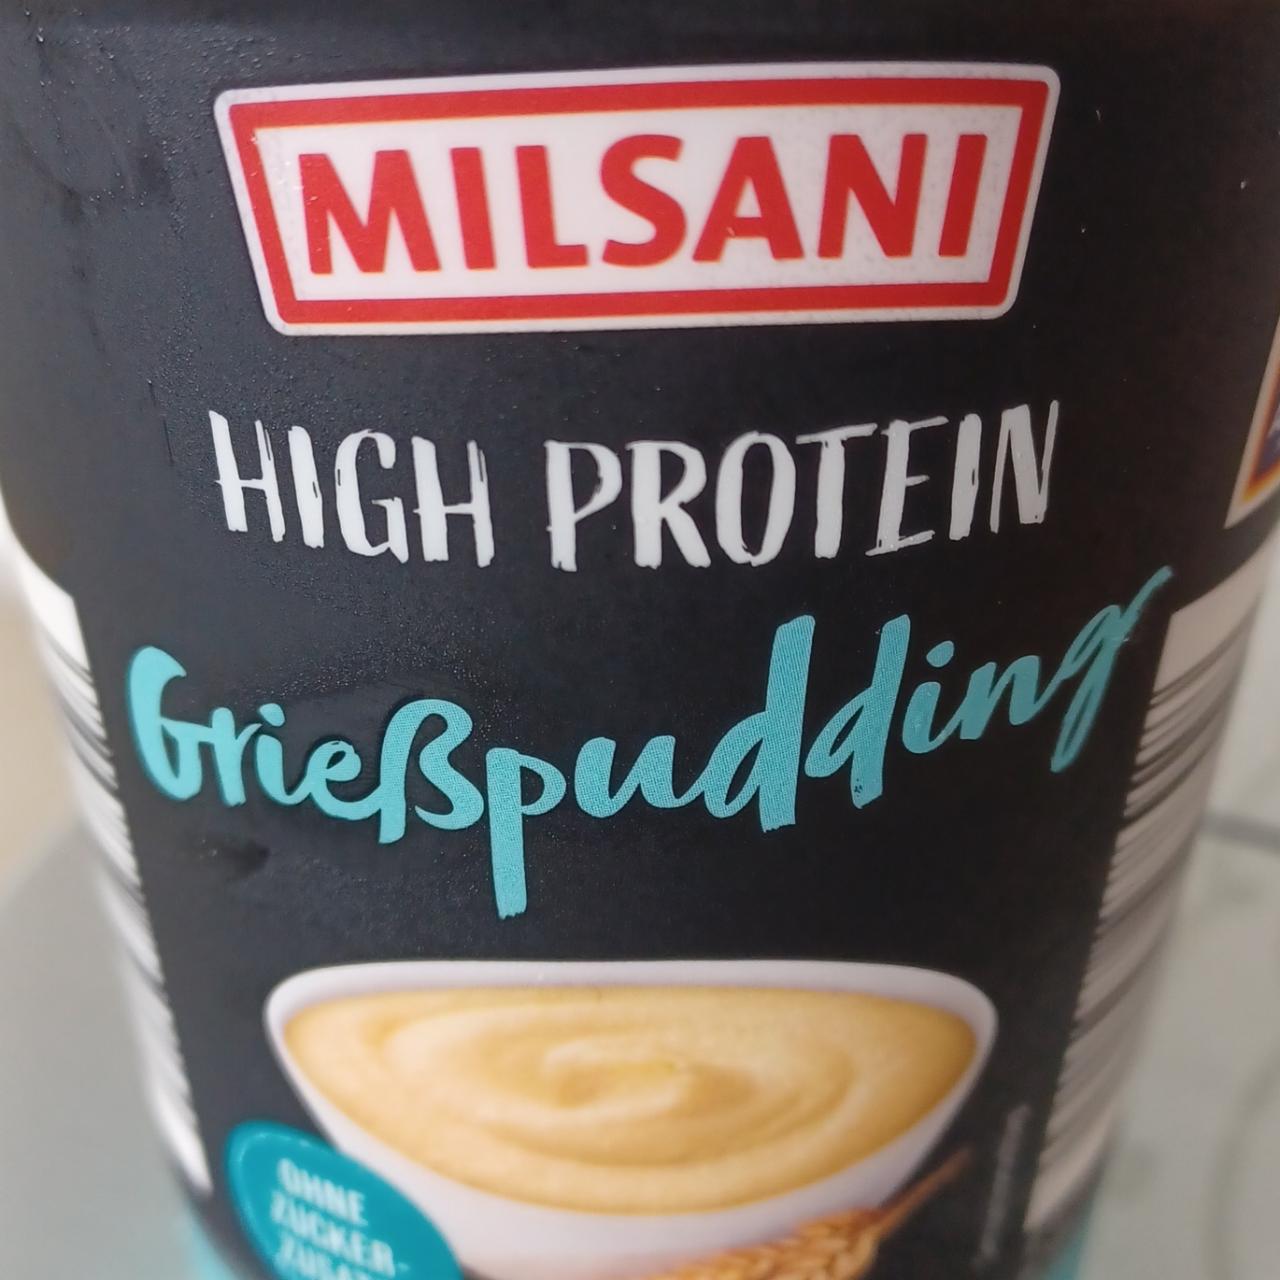 Fotografie - High Protein Grießpudding Pur Milsani